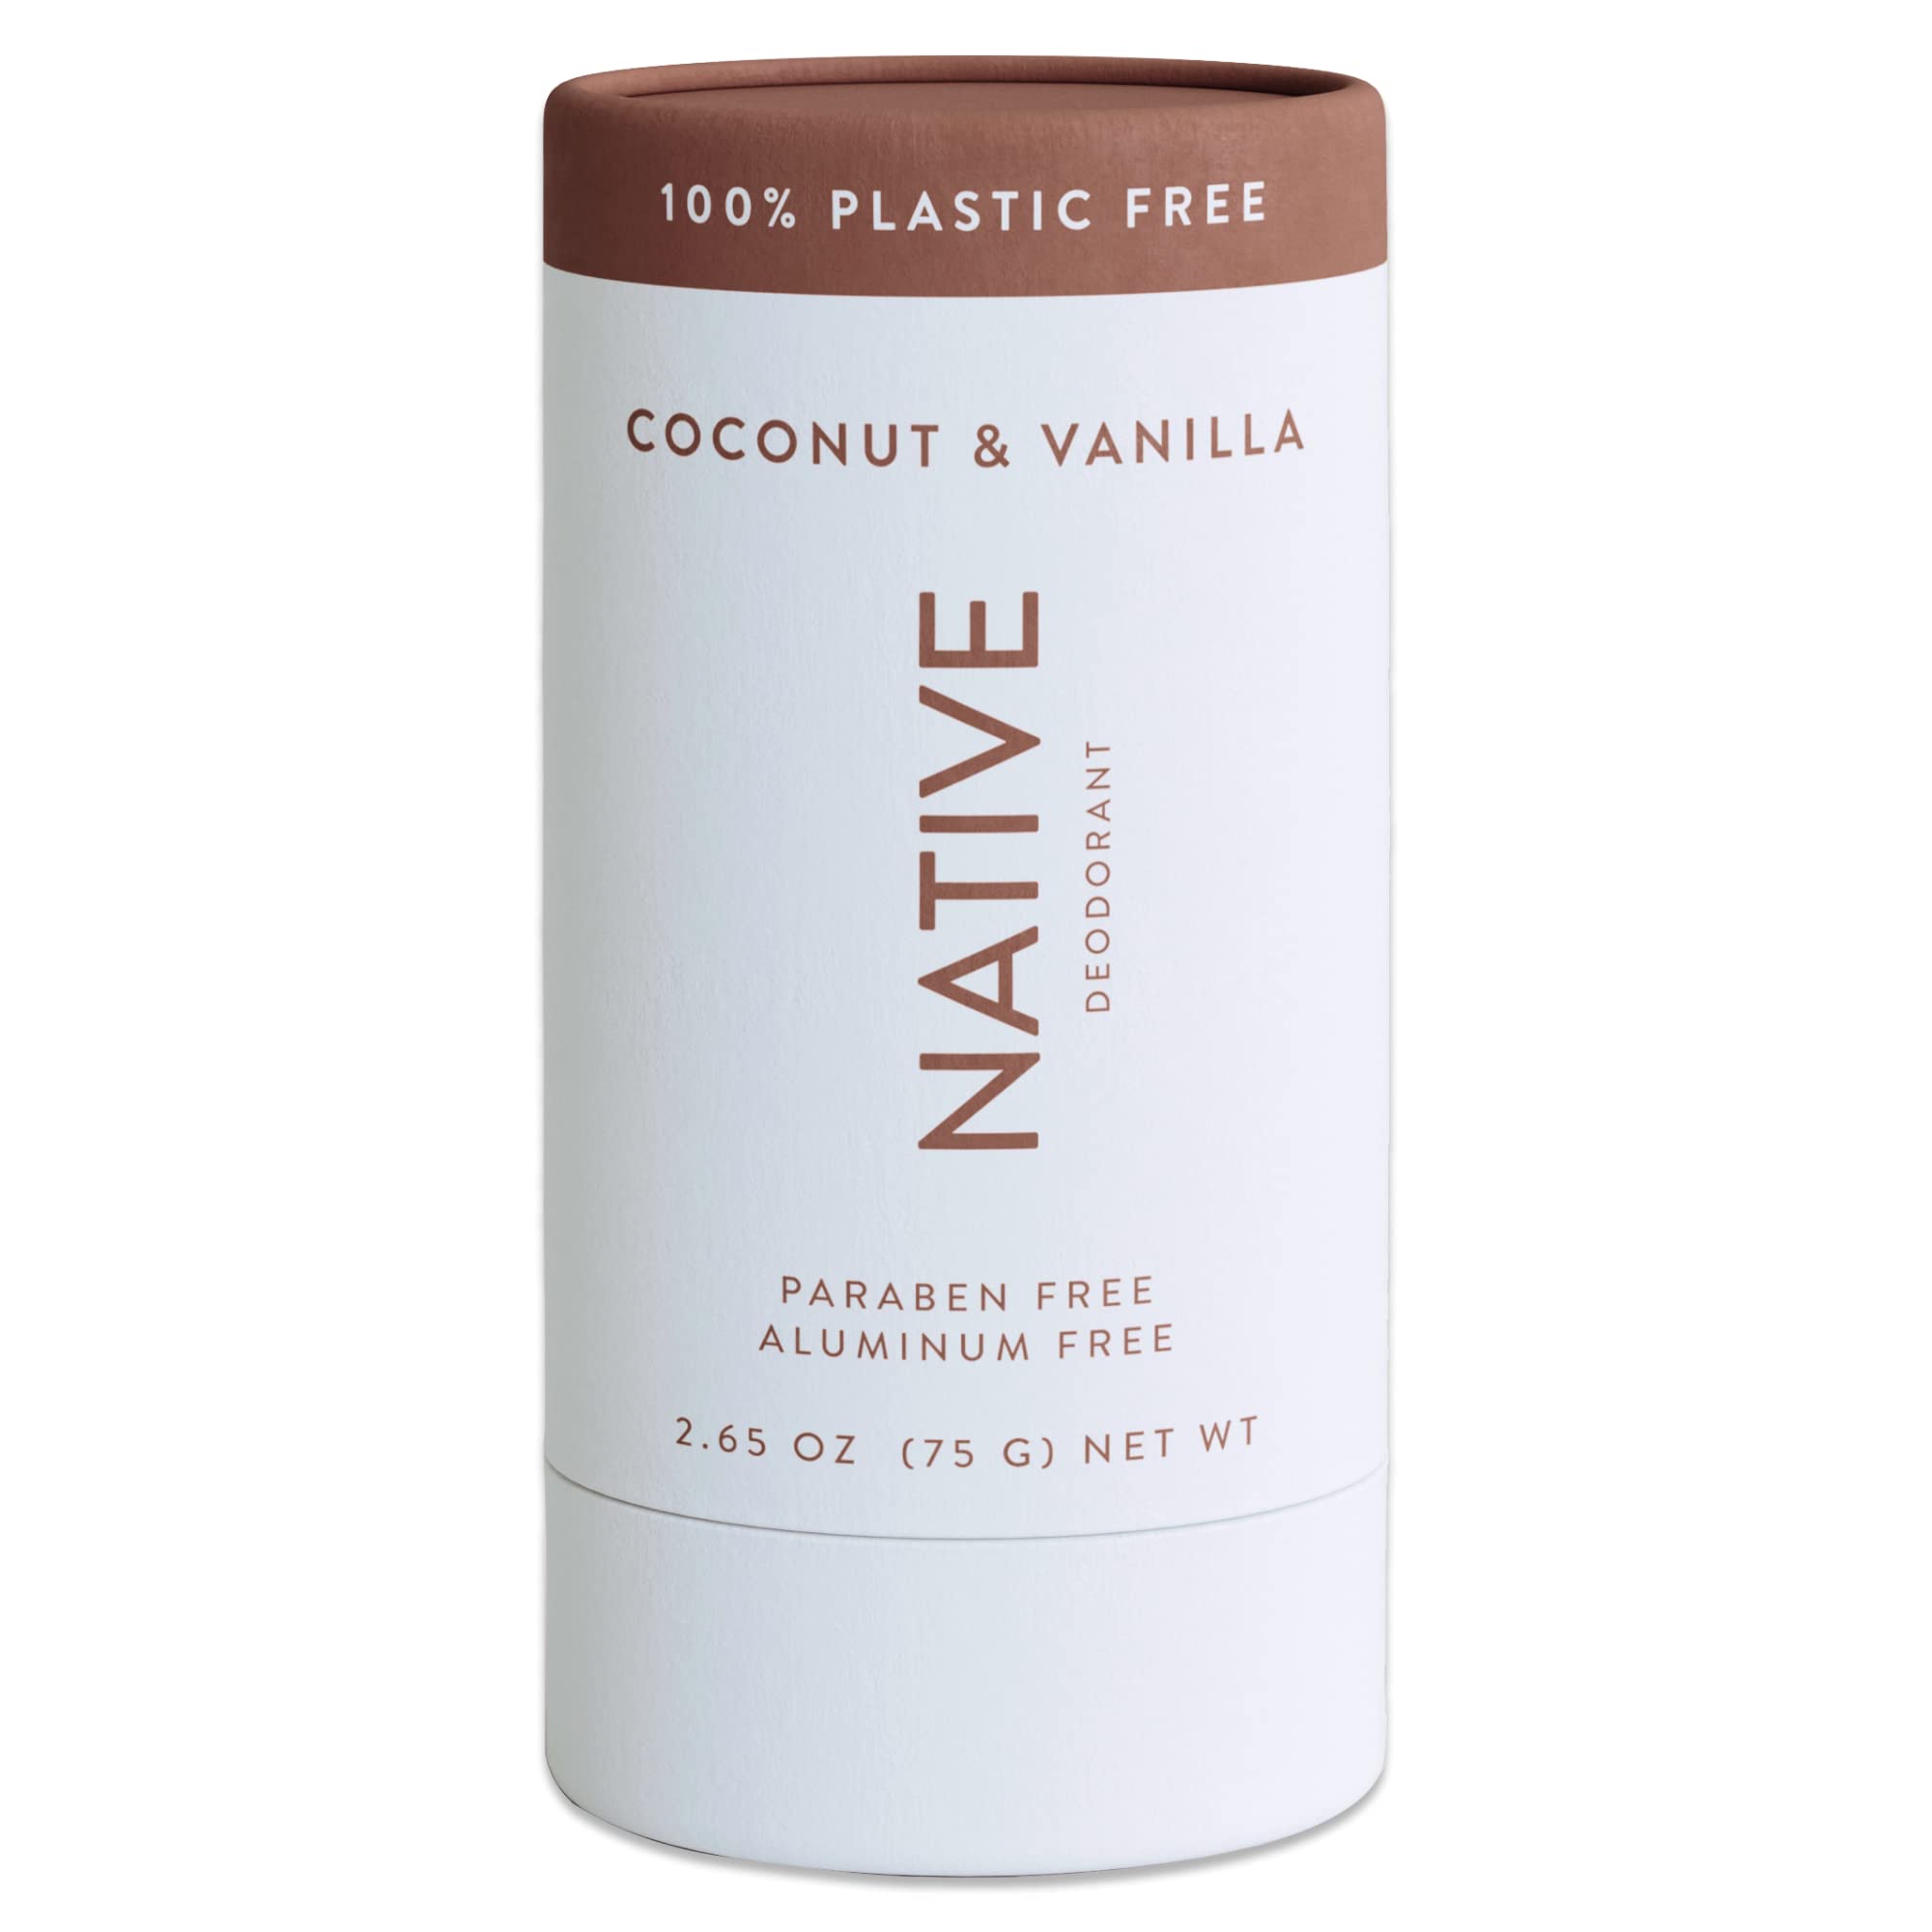 Native Plastic Free Deodorant | Natural Deodorant for Women and Men, Aluminum Free with Baking Soda, Probiotics, Coconut Oil and Shea Butter | Coconut & Vanilla